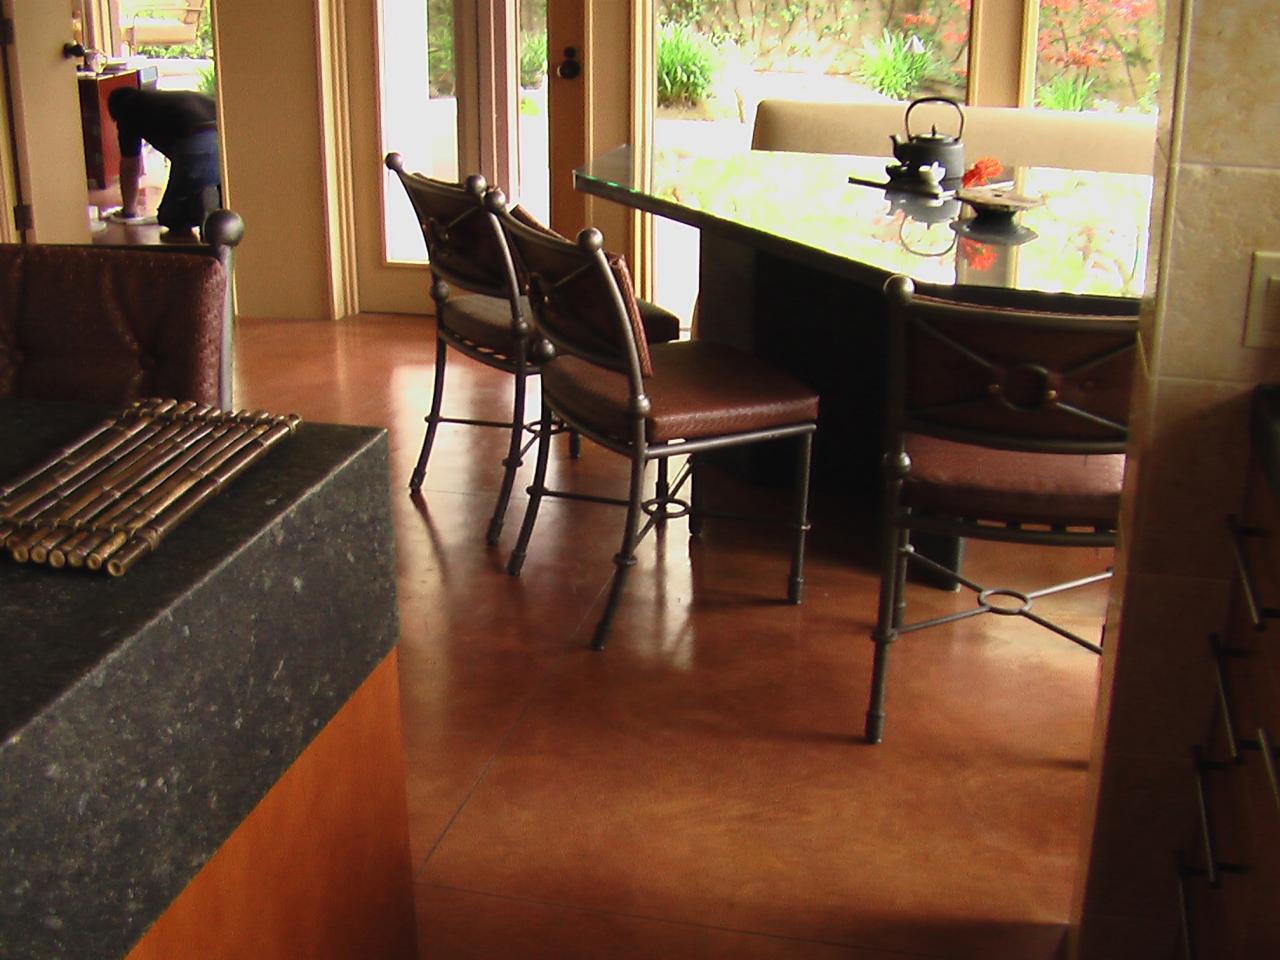 Concrete floor in kitchen image